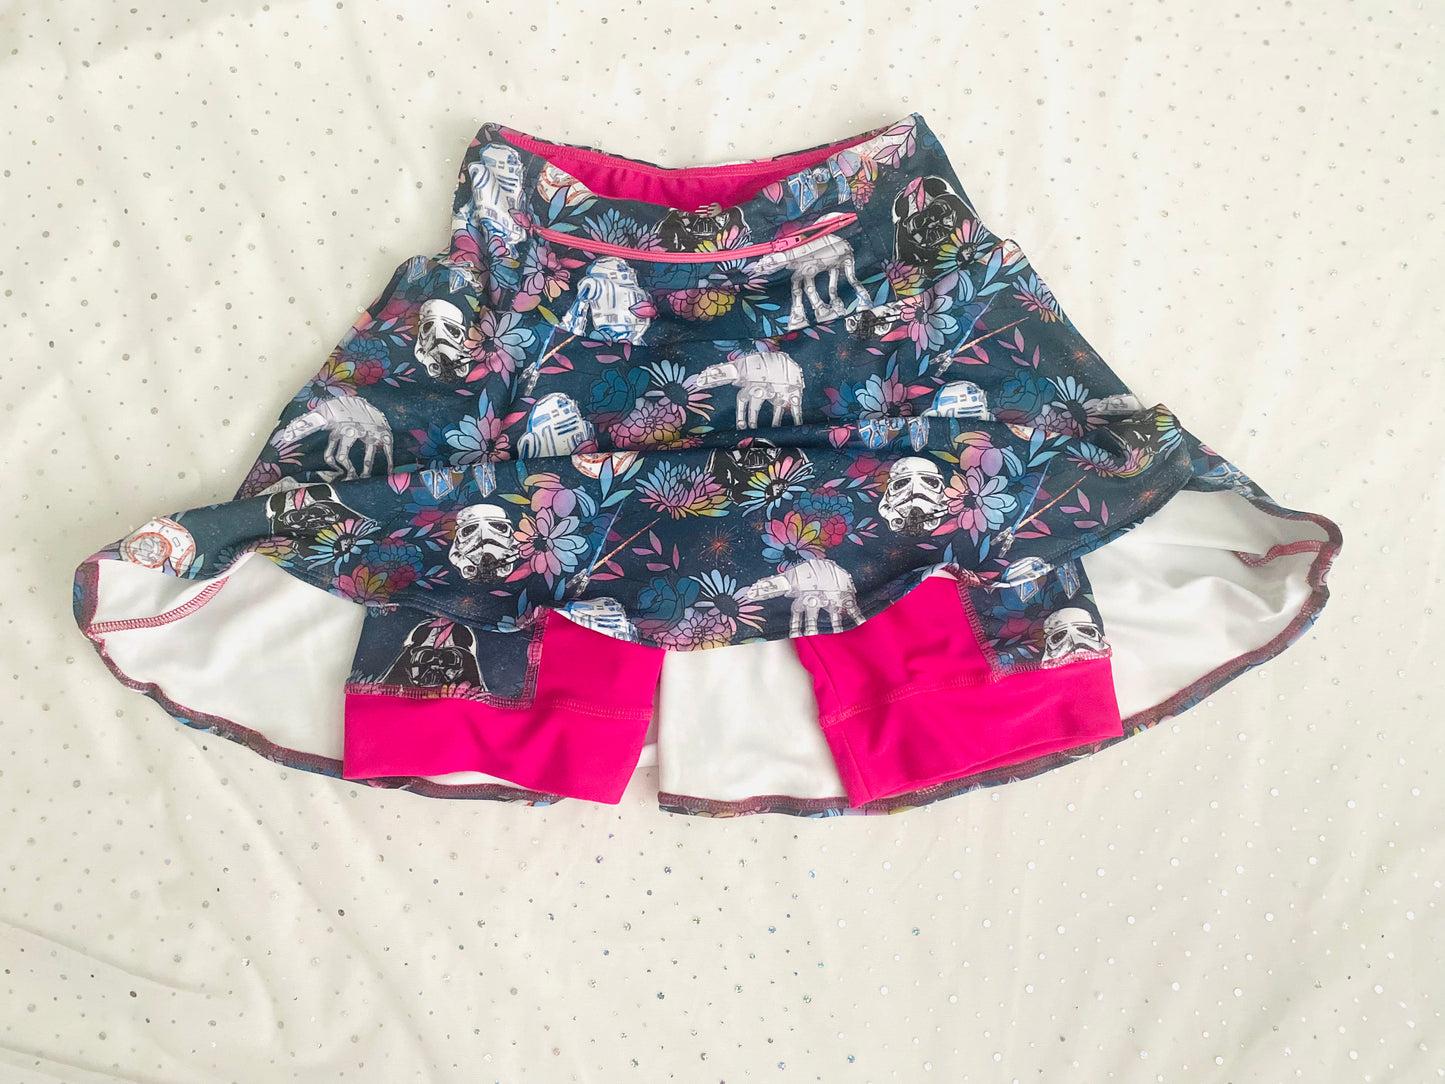 Custom skirt made with customer's material (Full style)